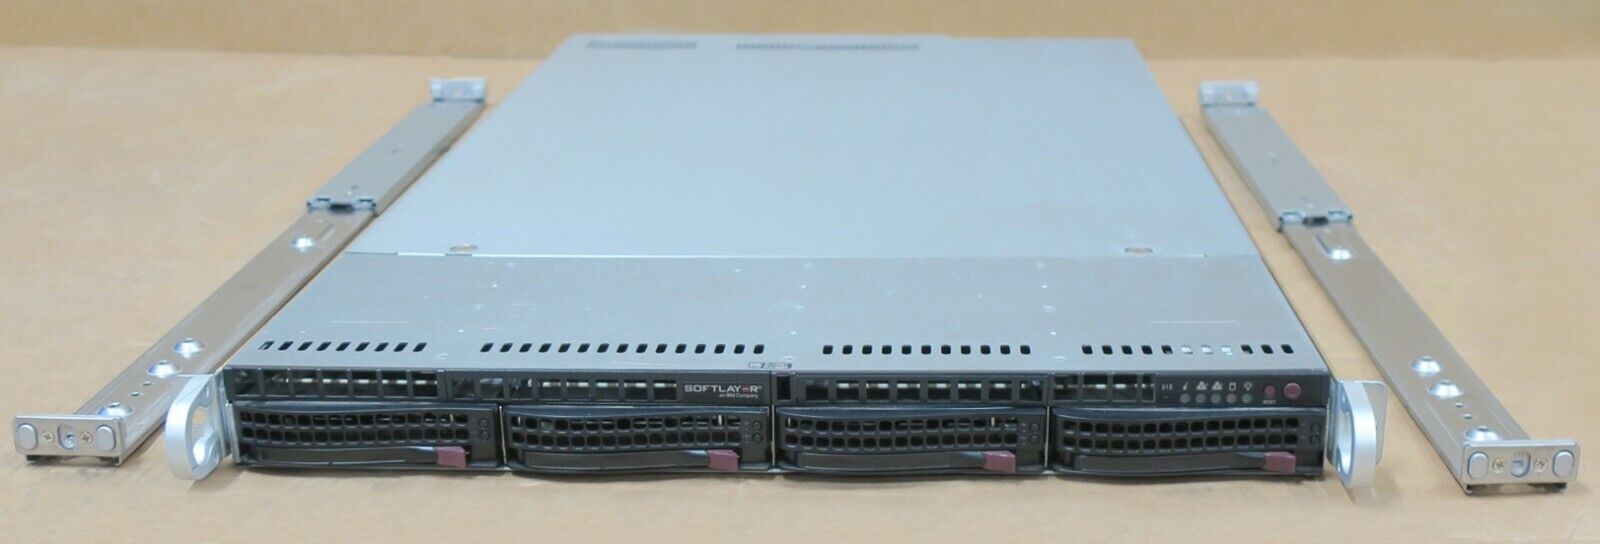 Supermicro CSE-819U 1U Server 2 x Intel XEON E5-2690v3 12-core 2.60GHz 192GB RAM